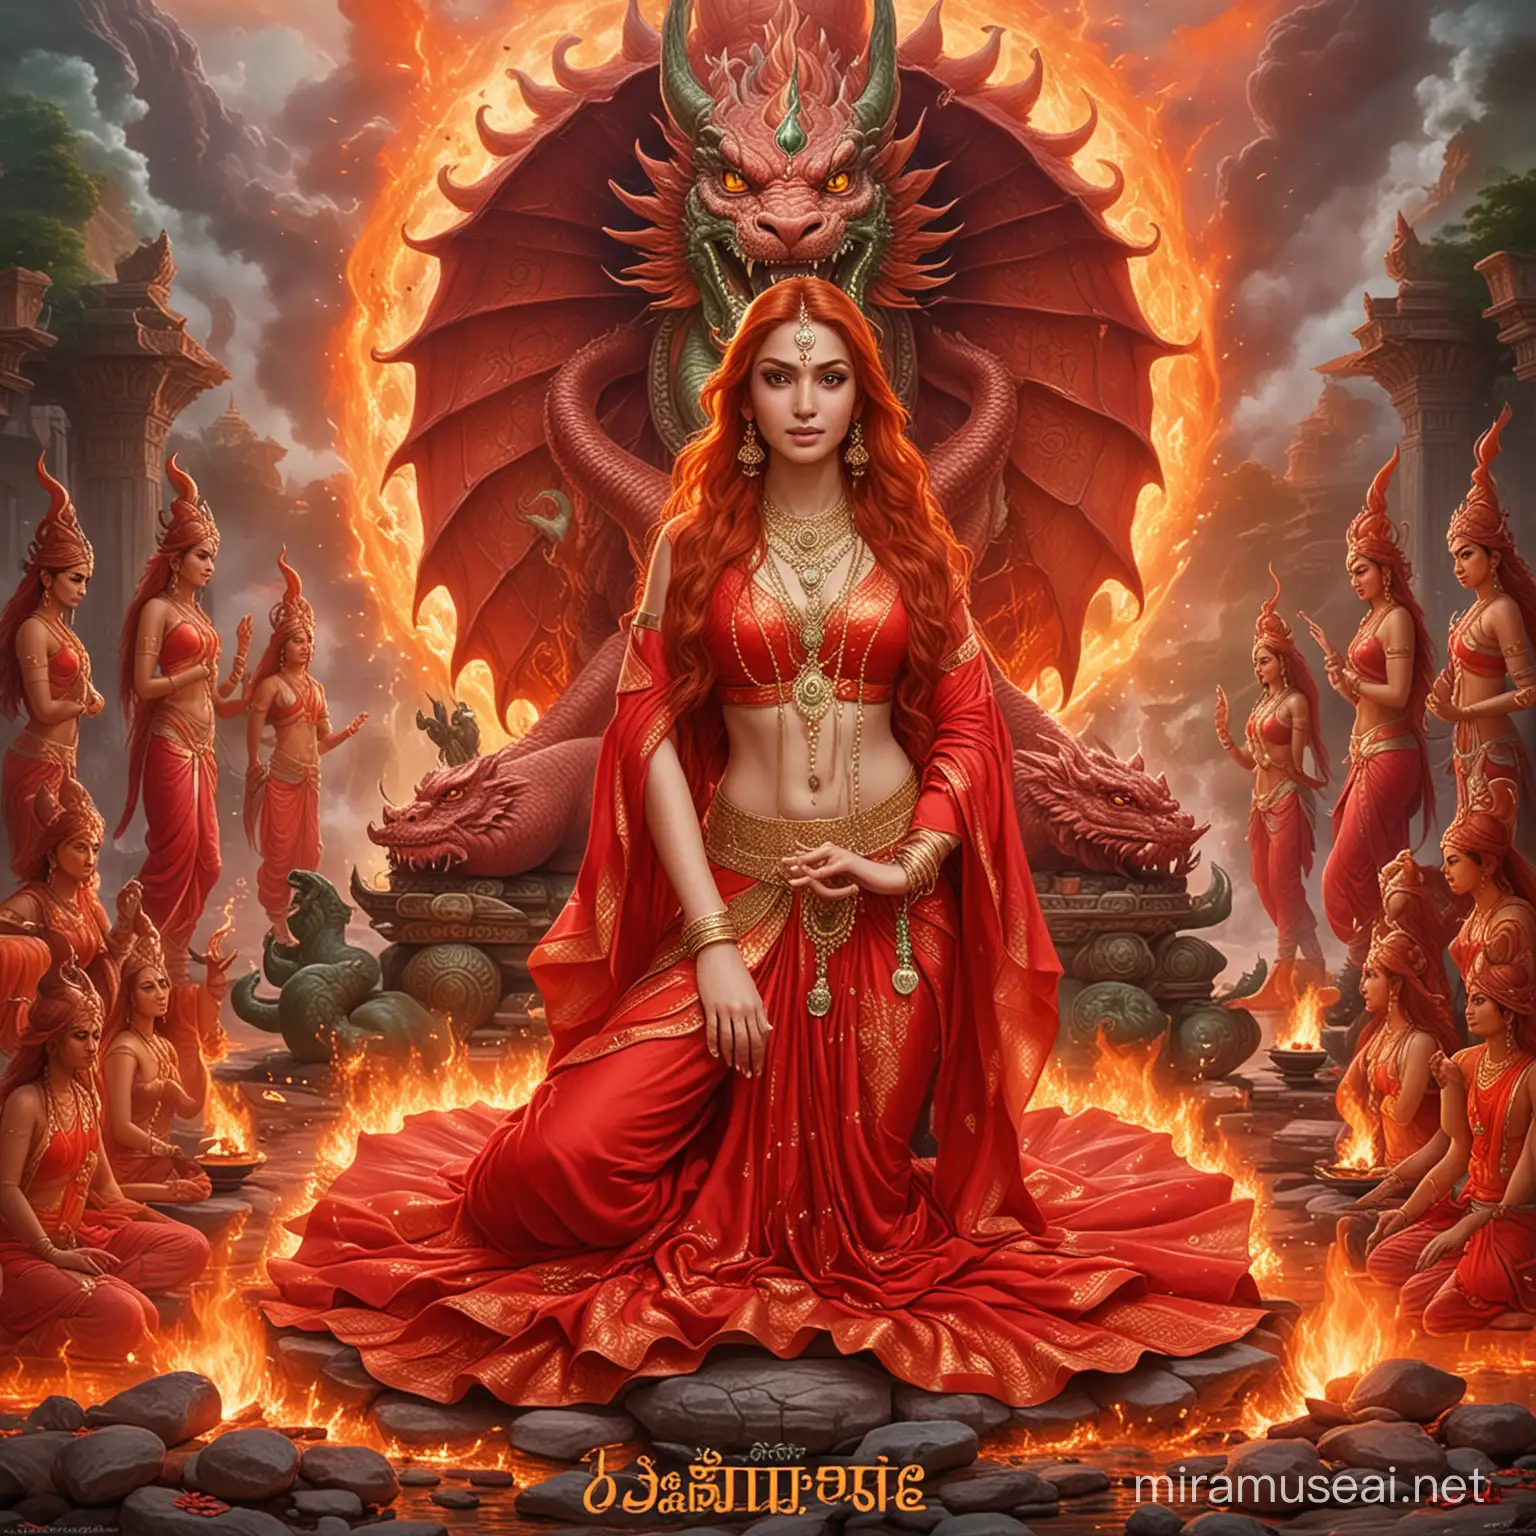 Powerful Hindu Empress Goddess Surrounded by Fire and Deities Vishnu Karma